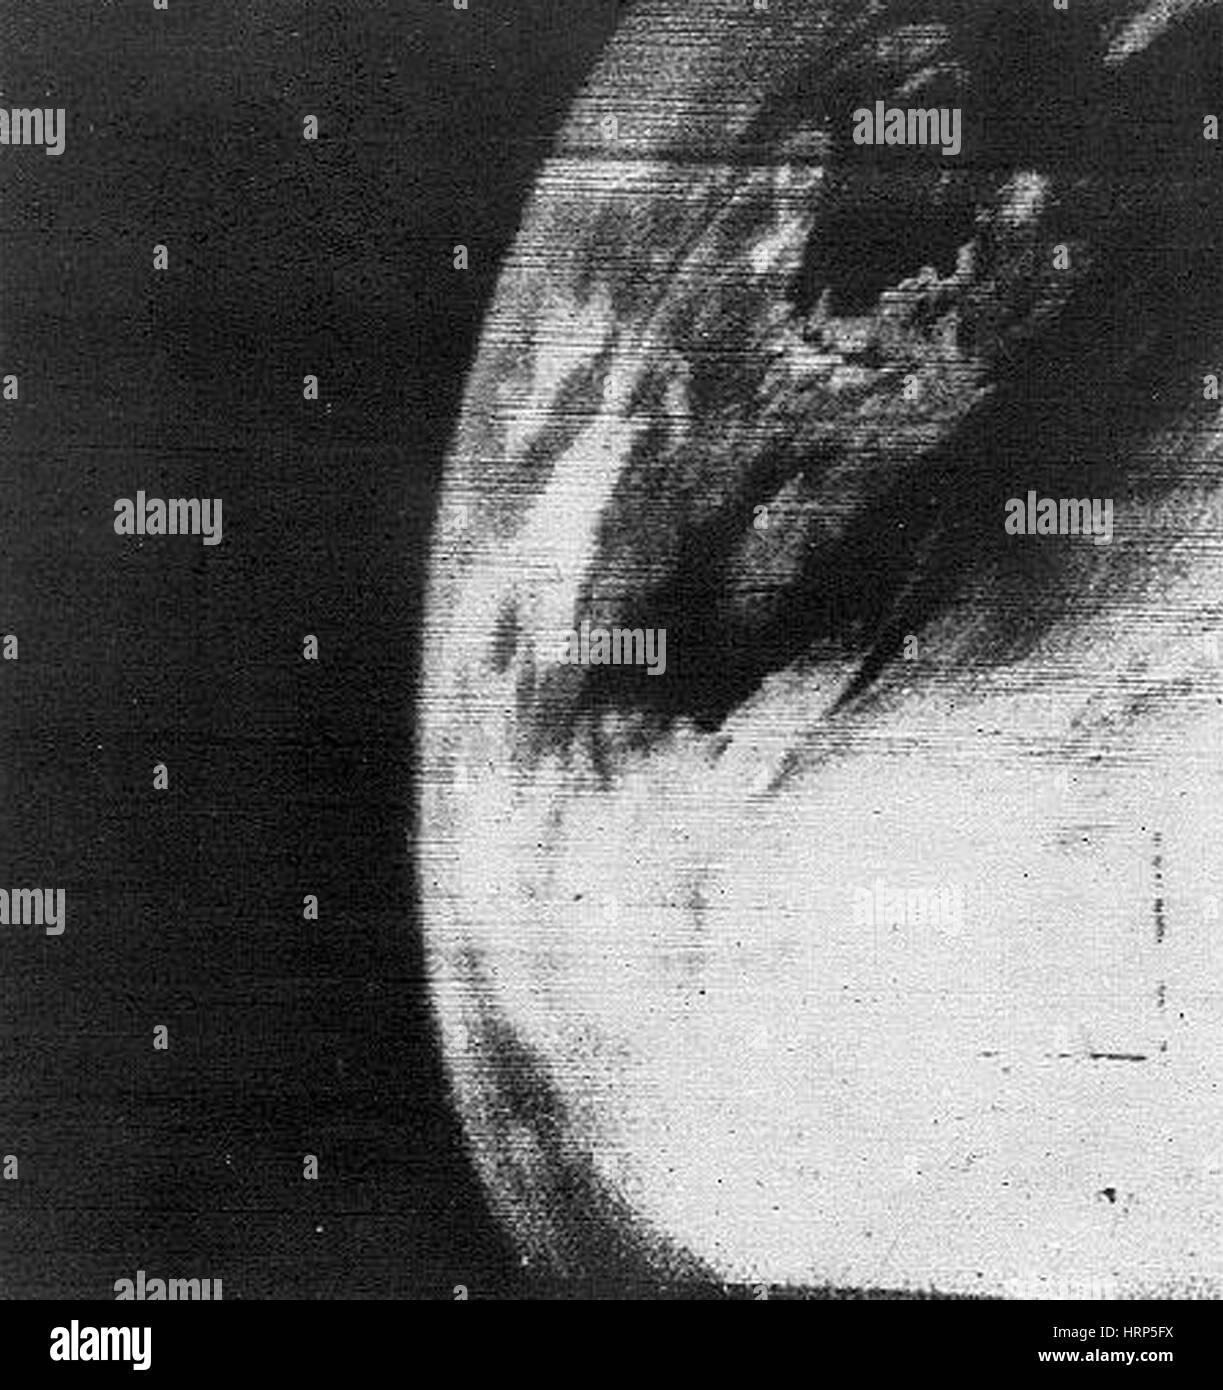 Premier Plat Photo de la Terre vue de TIROS I, 1960 Banque D'Images